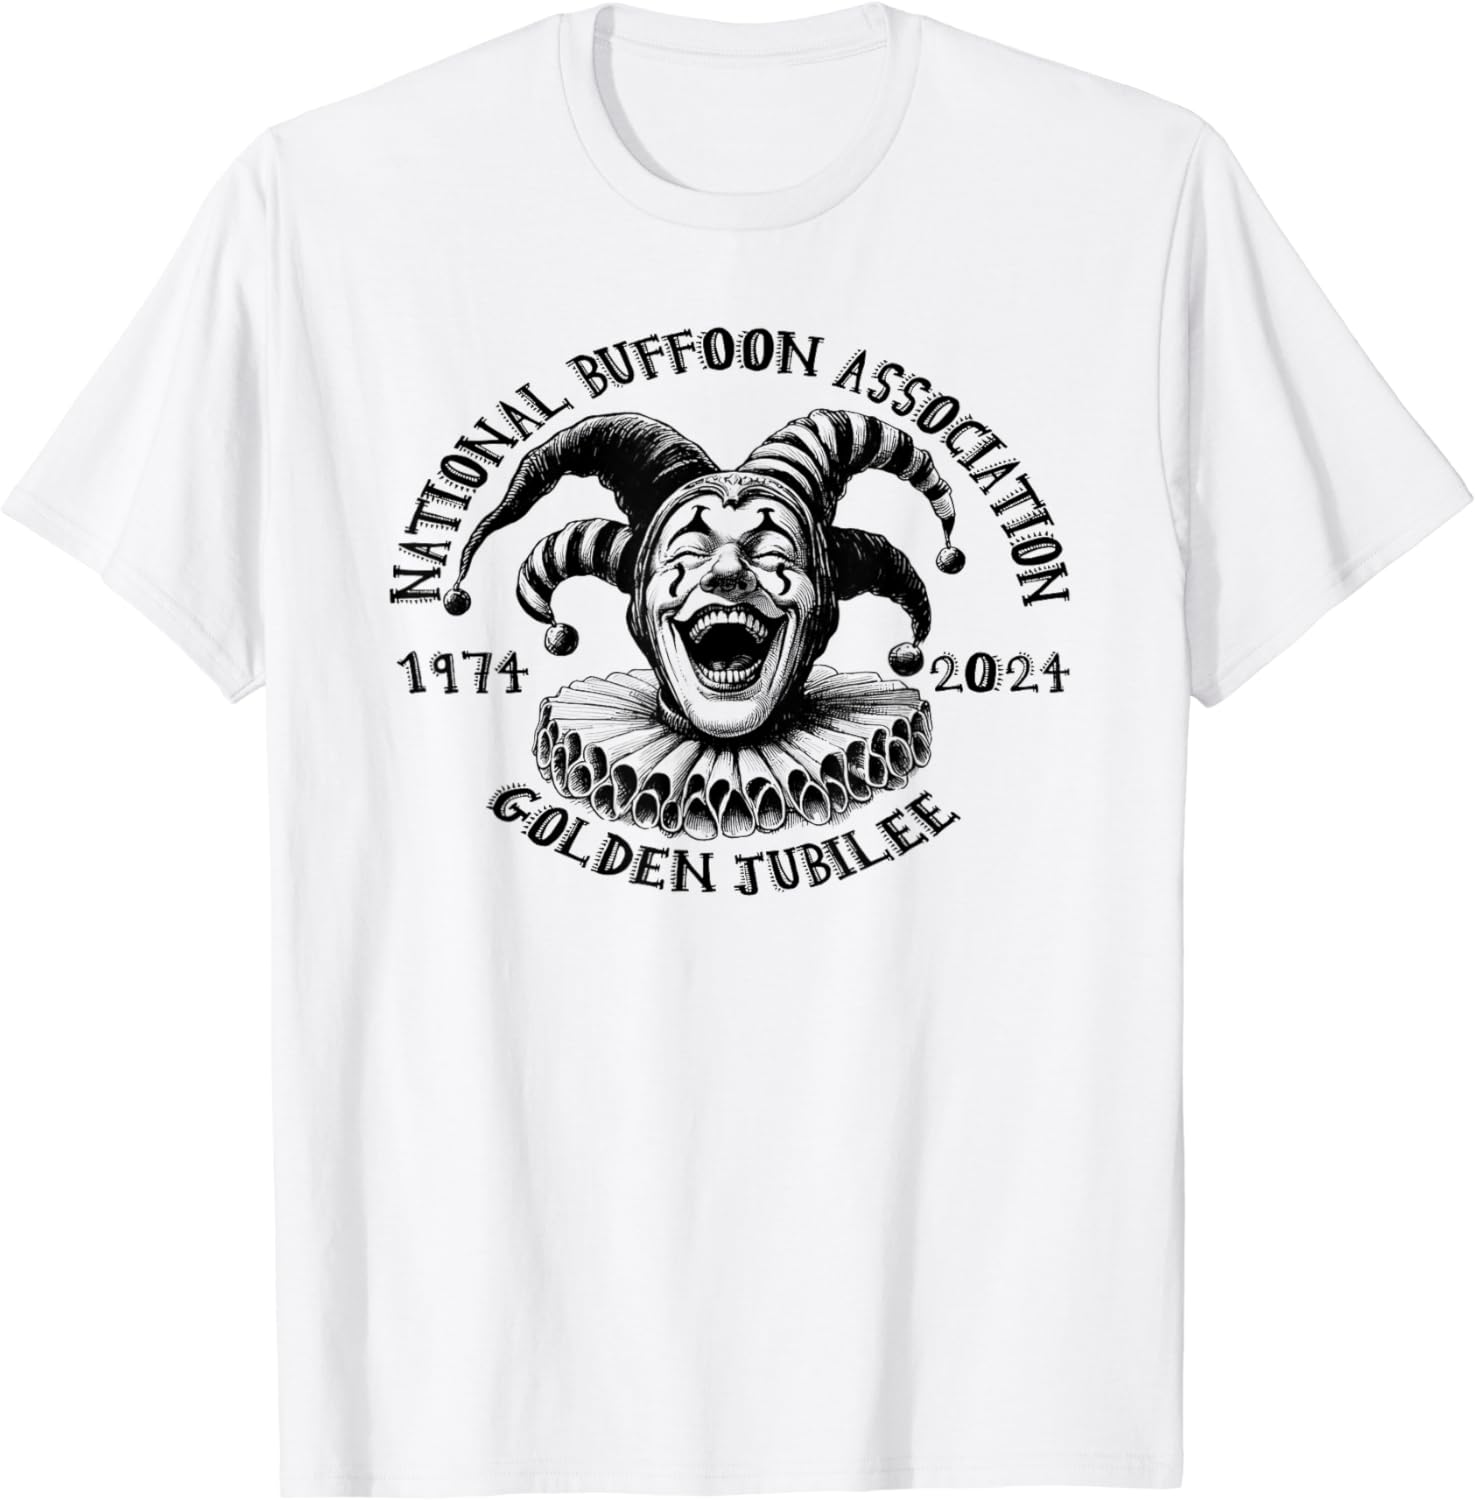 1974-2024 NATIONAL BUFFOON ASSOCIATION GOLDEN JUBILEE T-Shirt - Buy t ...